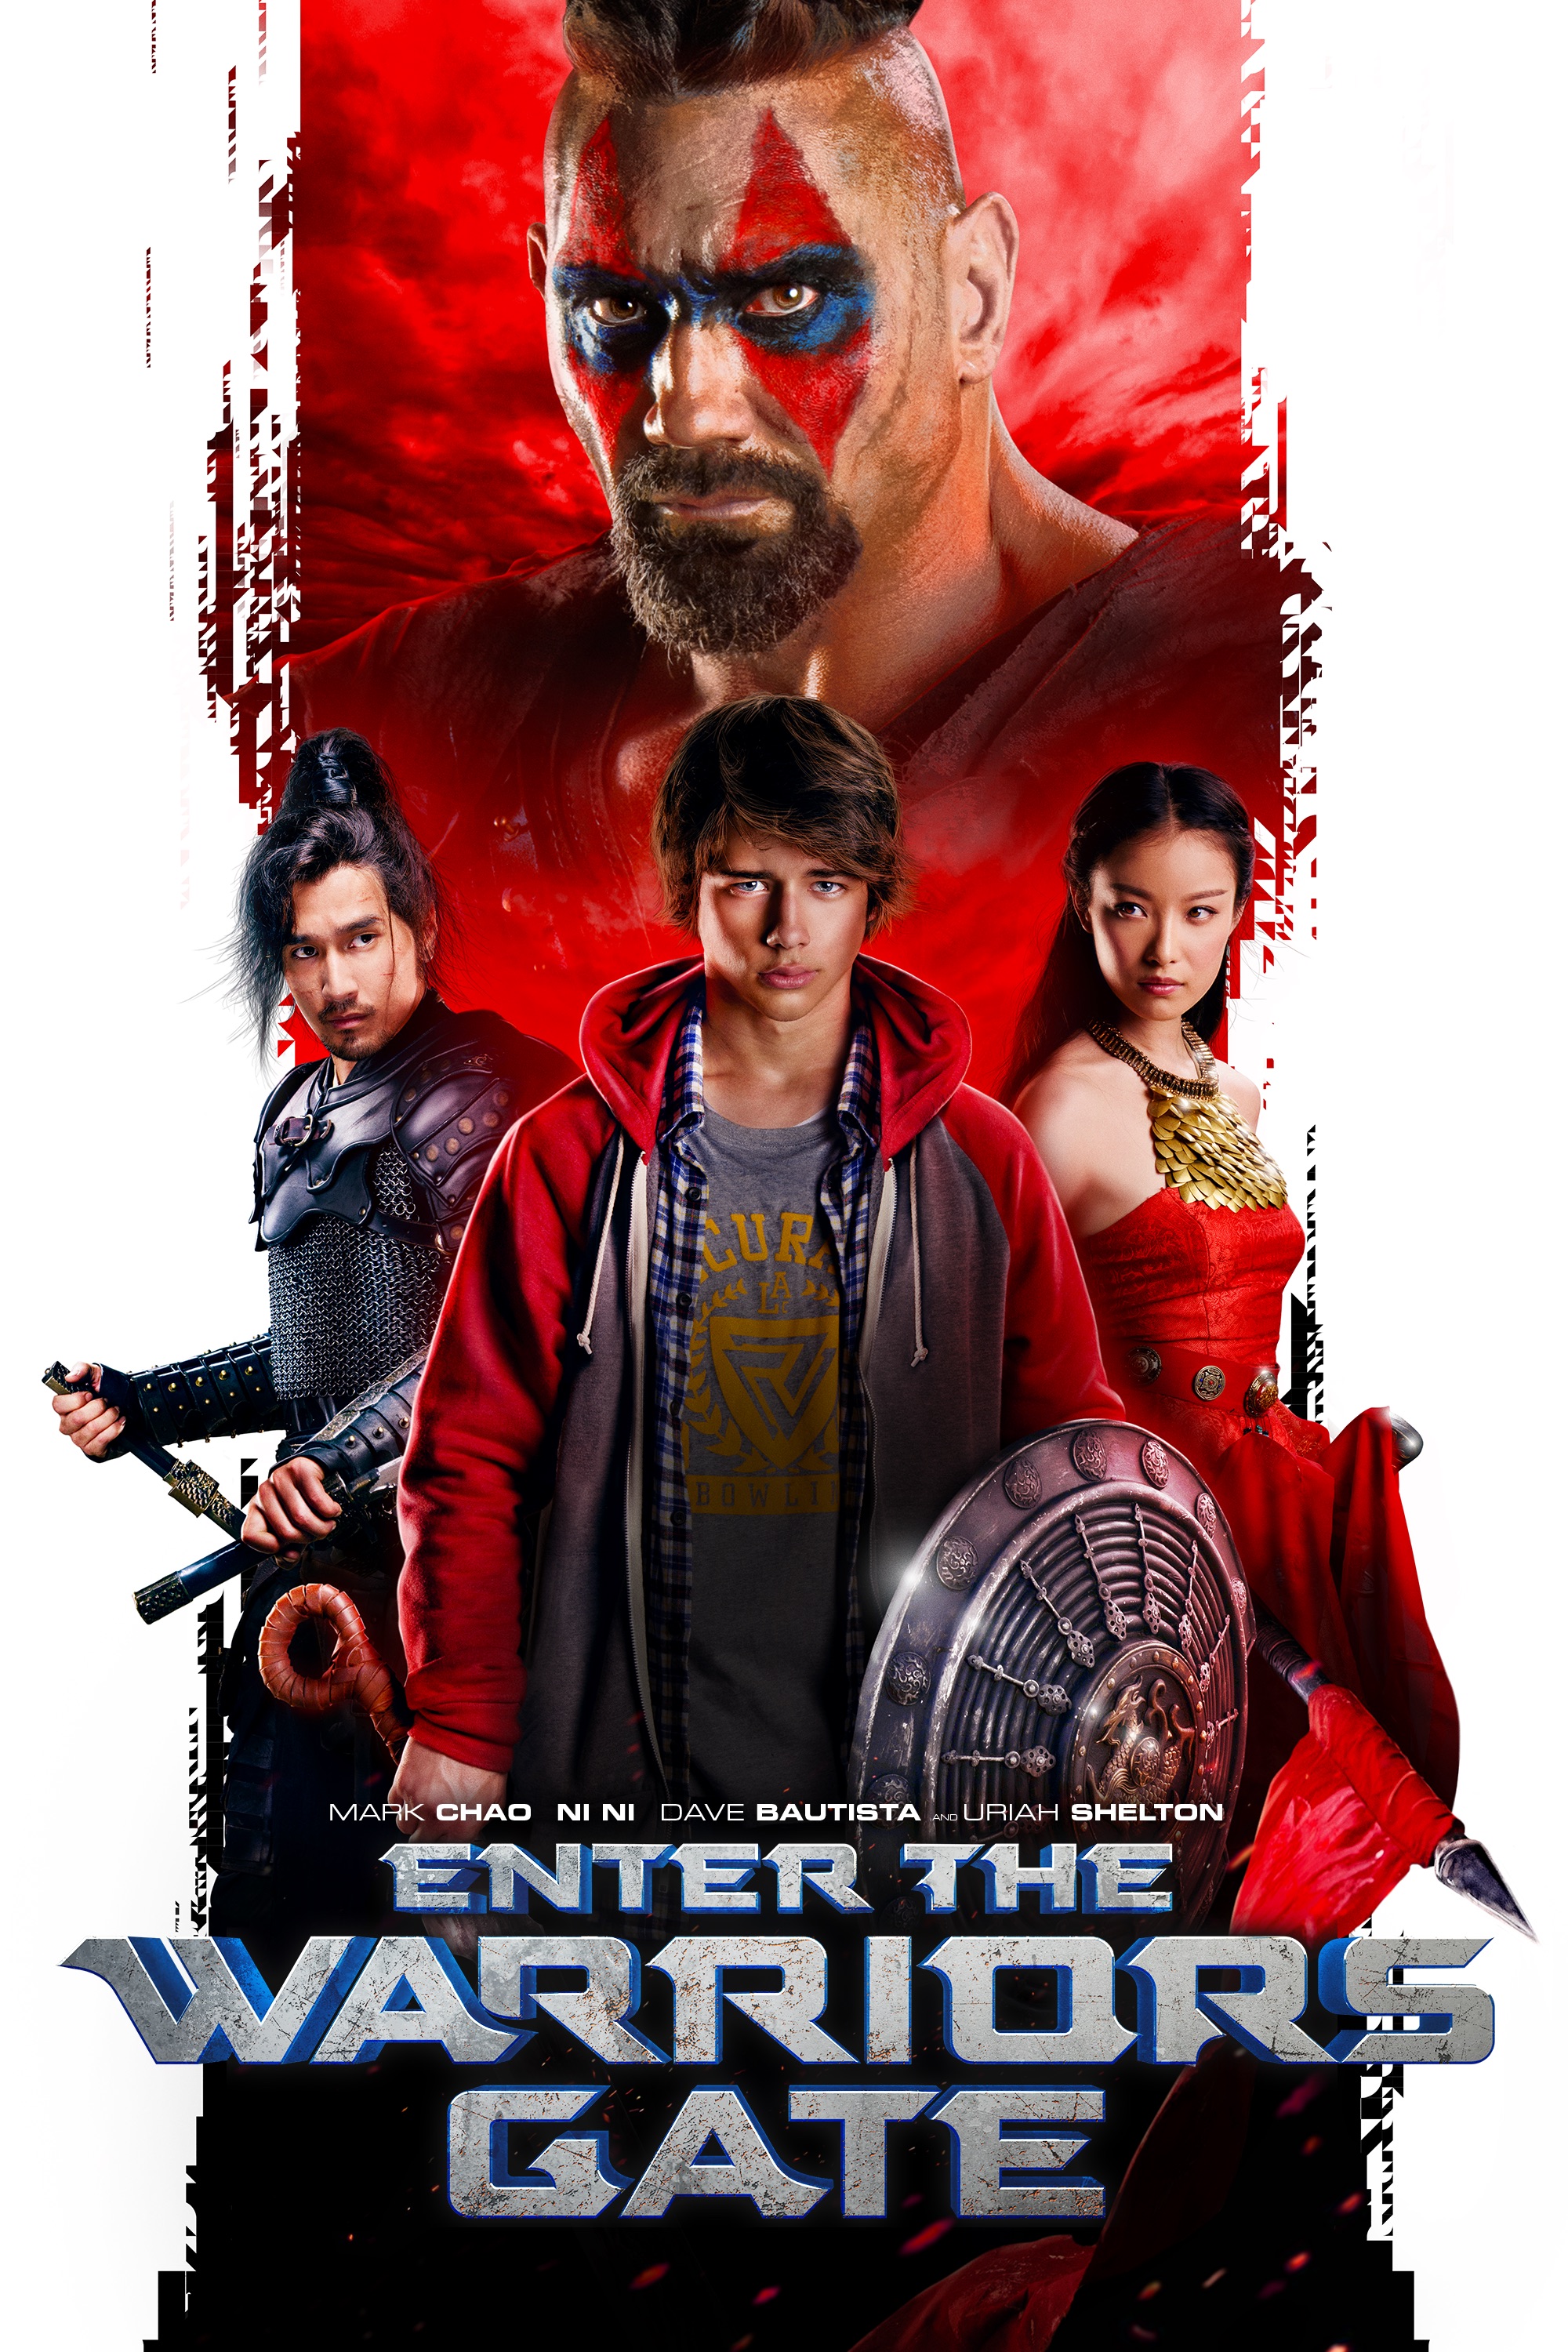 Nonton film Enter The Warriors Gate layarkaca21 indoxx1 ganool online streaming terbaru